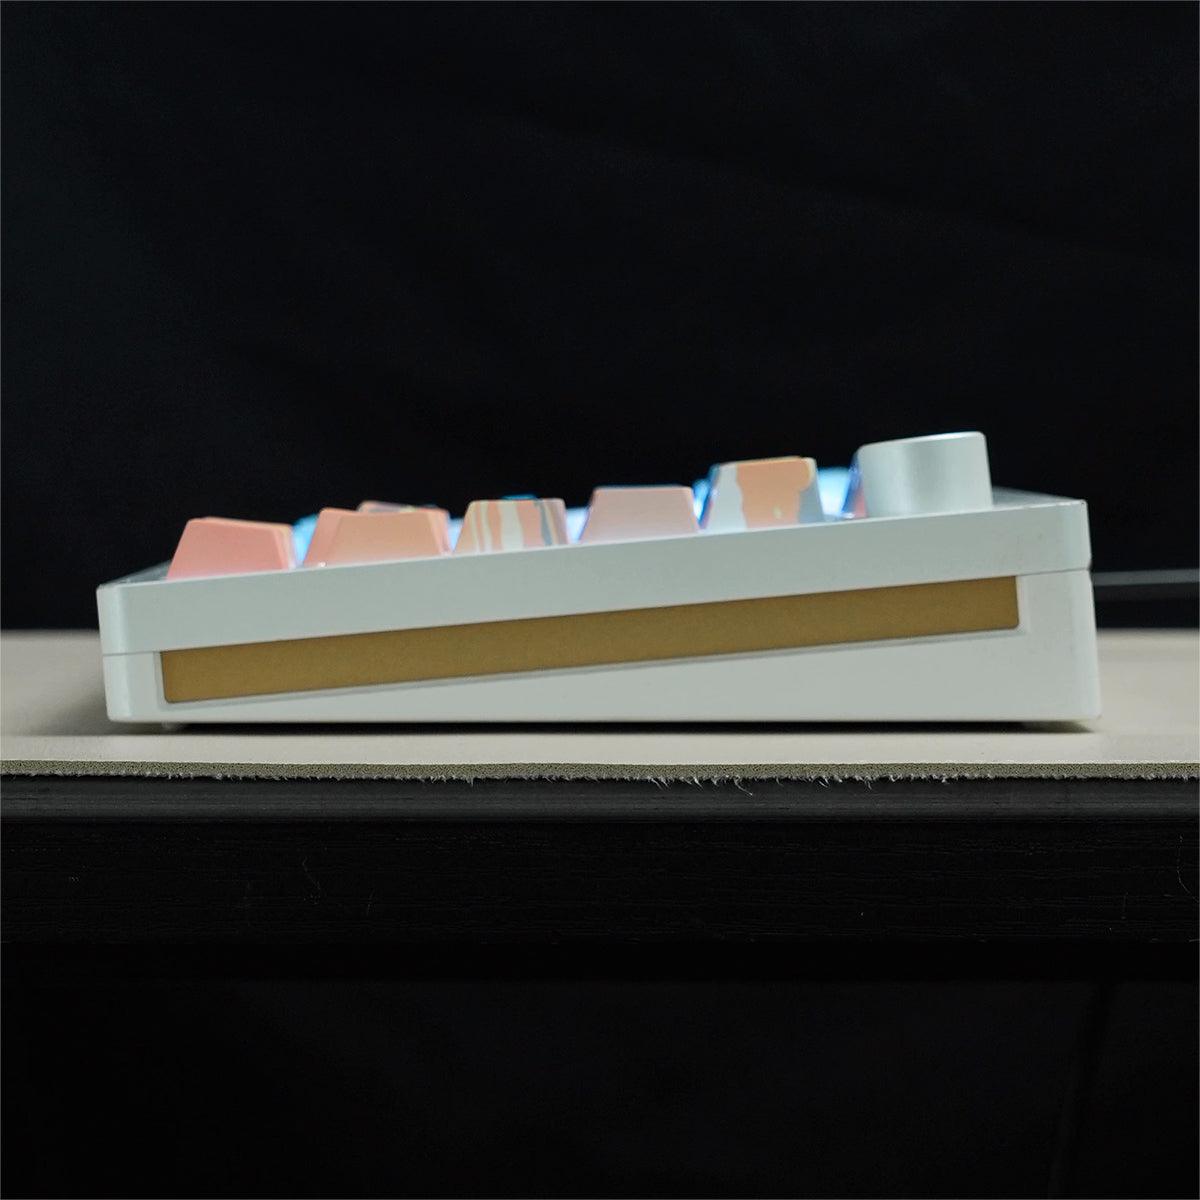 Cherry Profile Dye-Sub PBT Keycap Set - Sunset - KeyCapUS